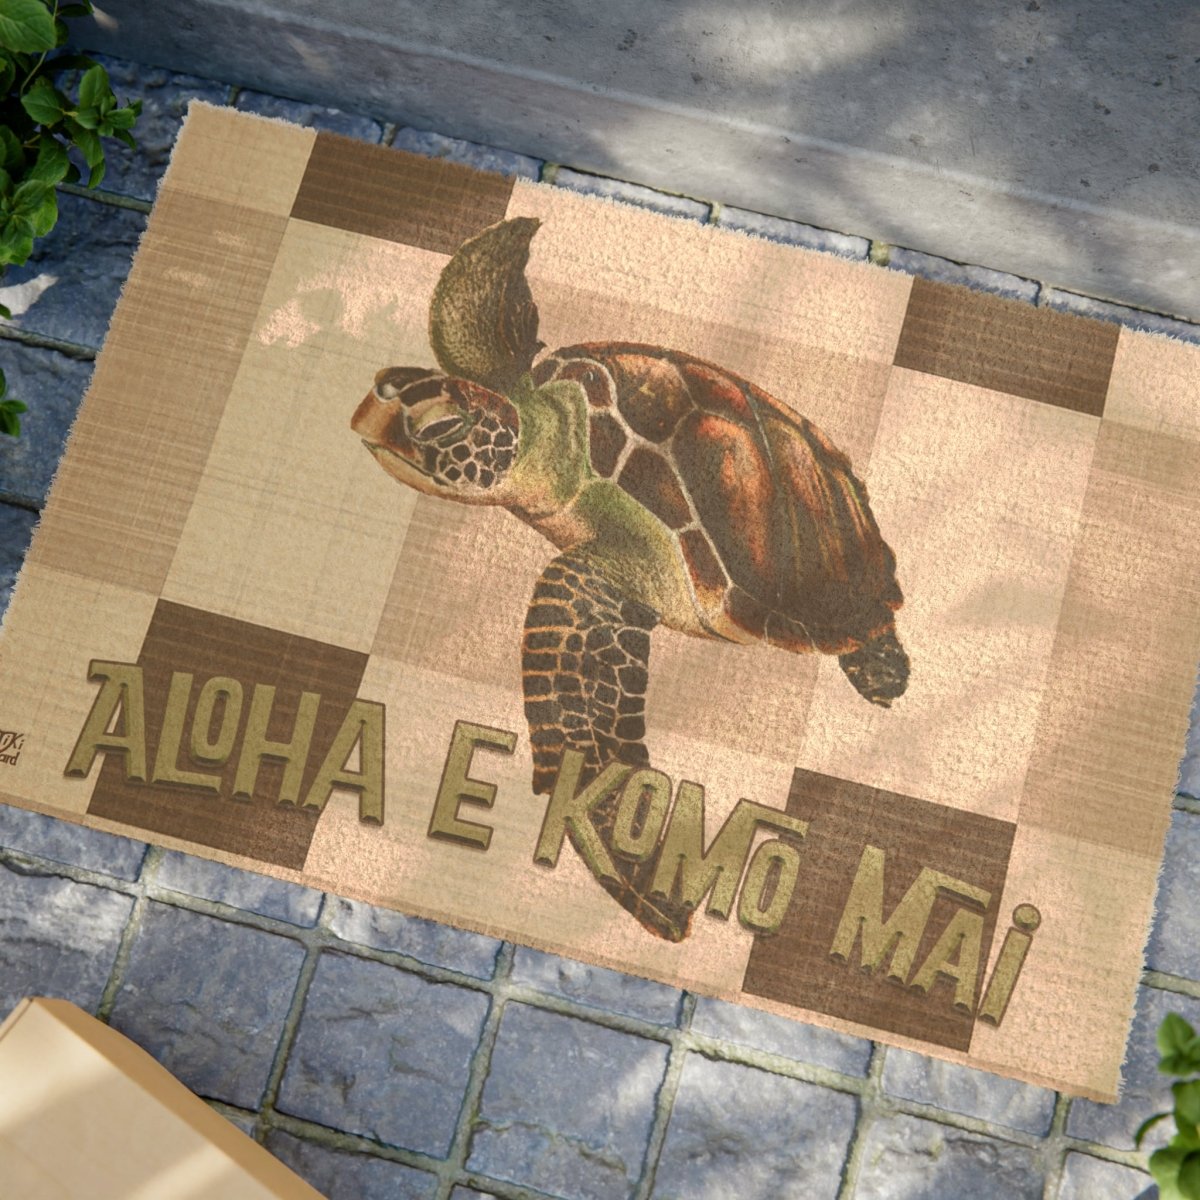 Aloha E Komo Mai Doormat - The Tiki Yard - Outdoor Doormat